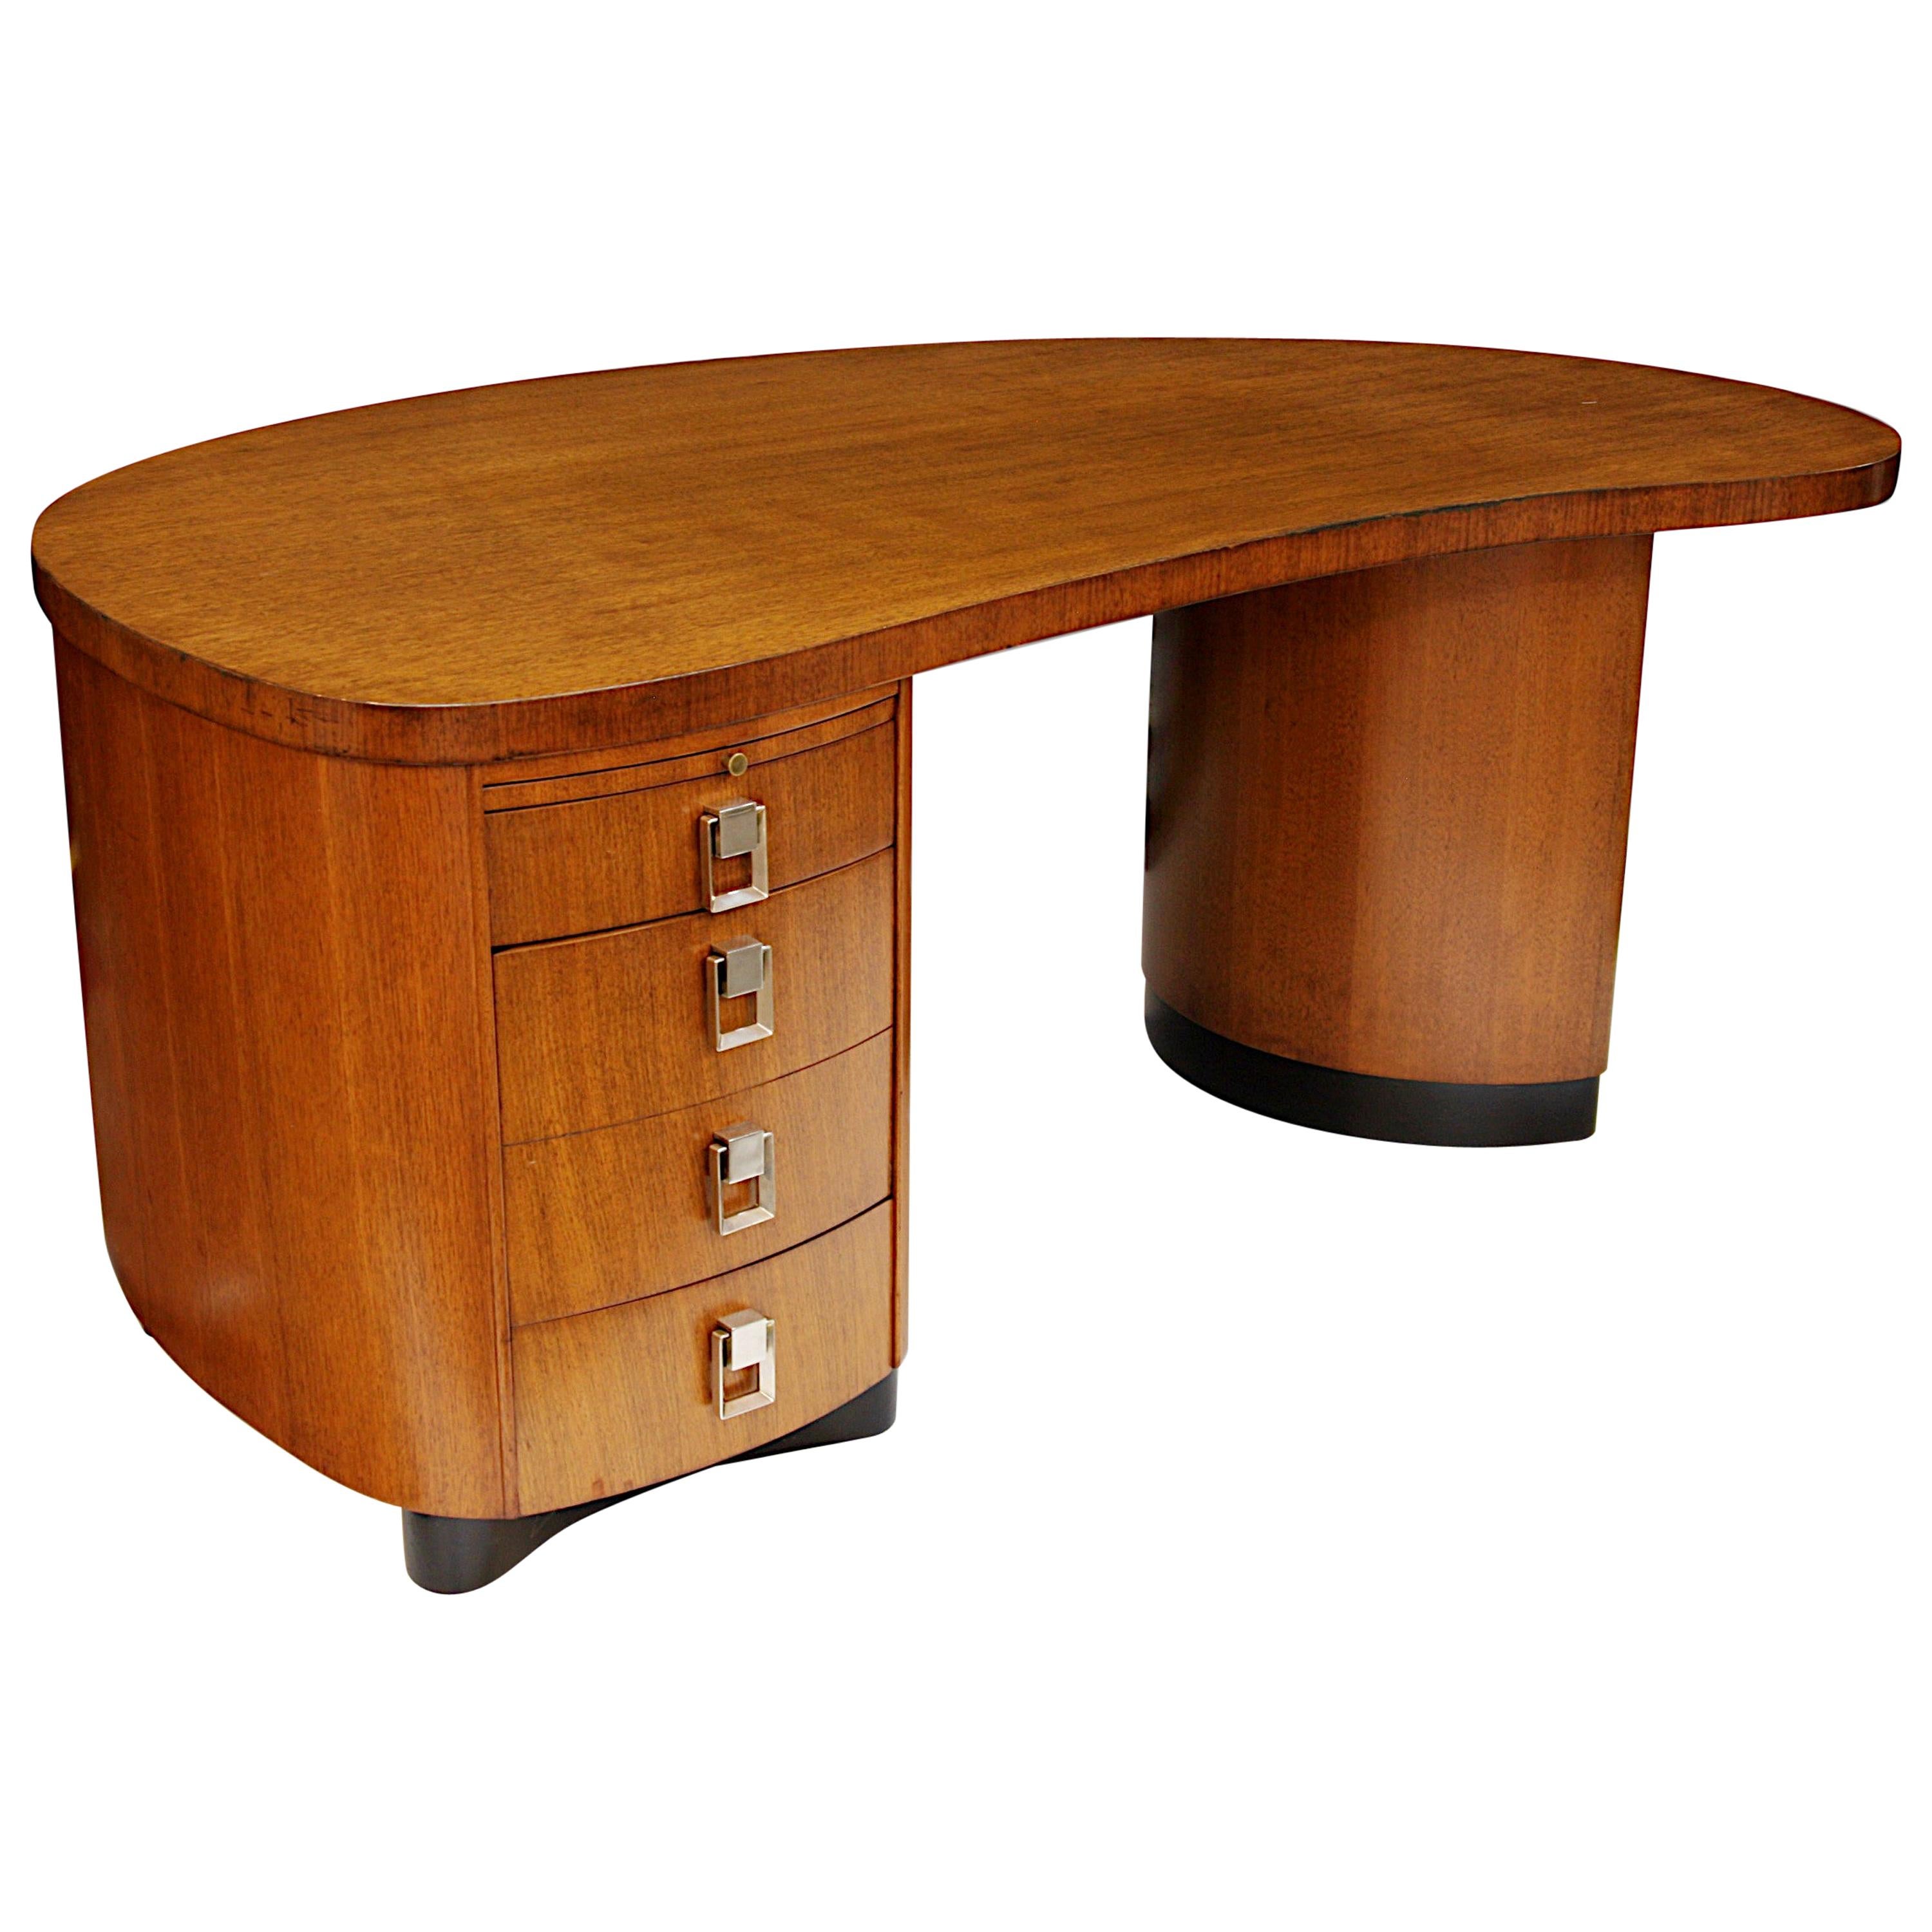 Rare 1950s Mid-Century Modern Executive Series Kidney-Shaped Desk by Stow Davis